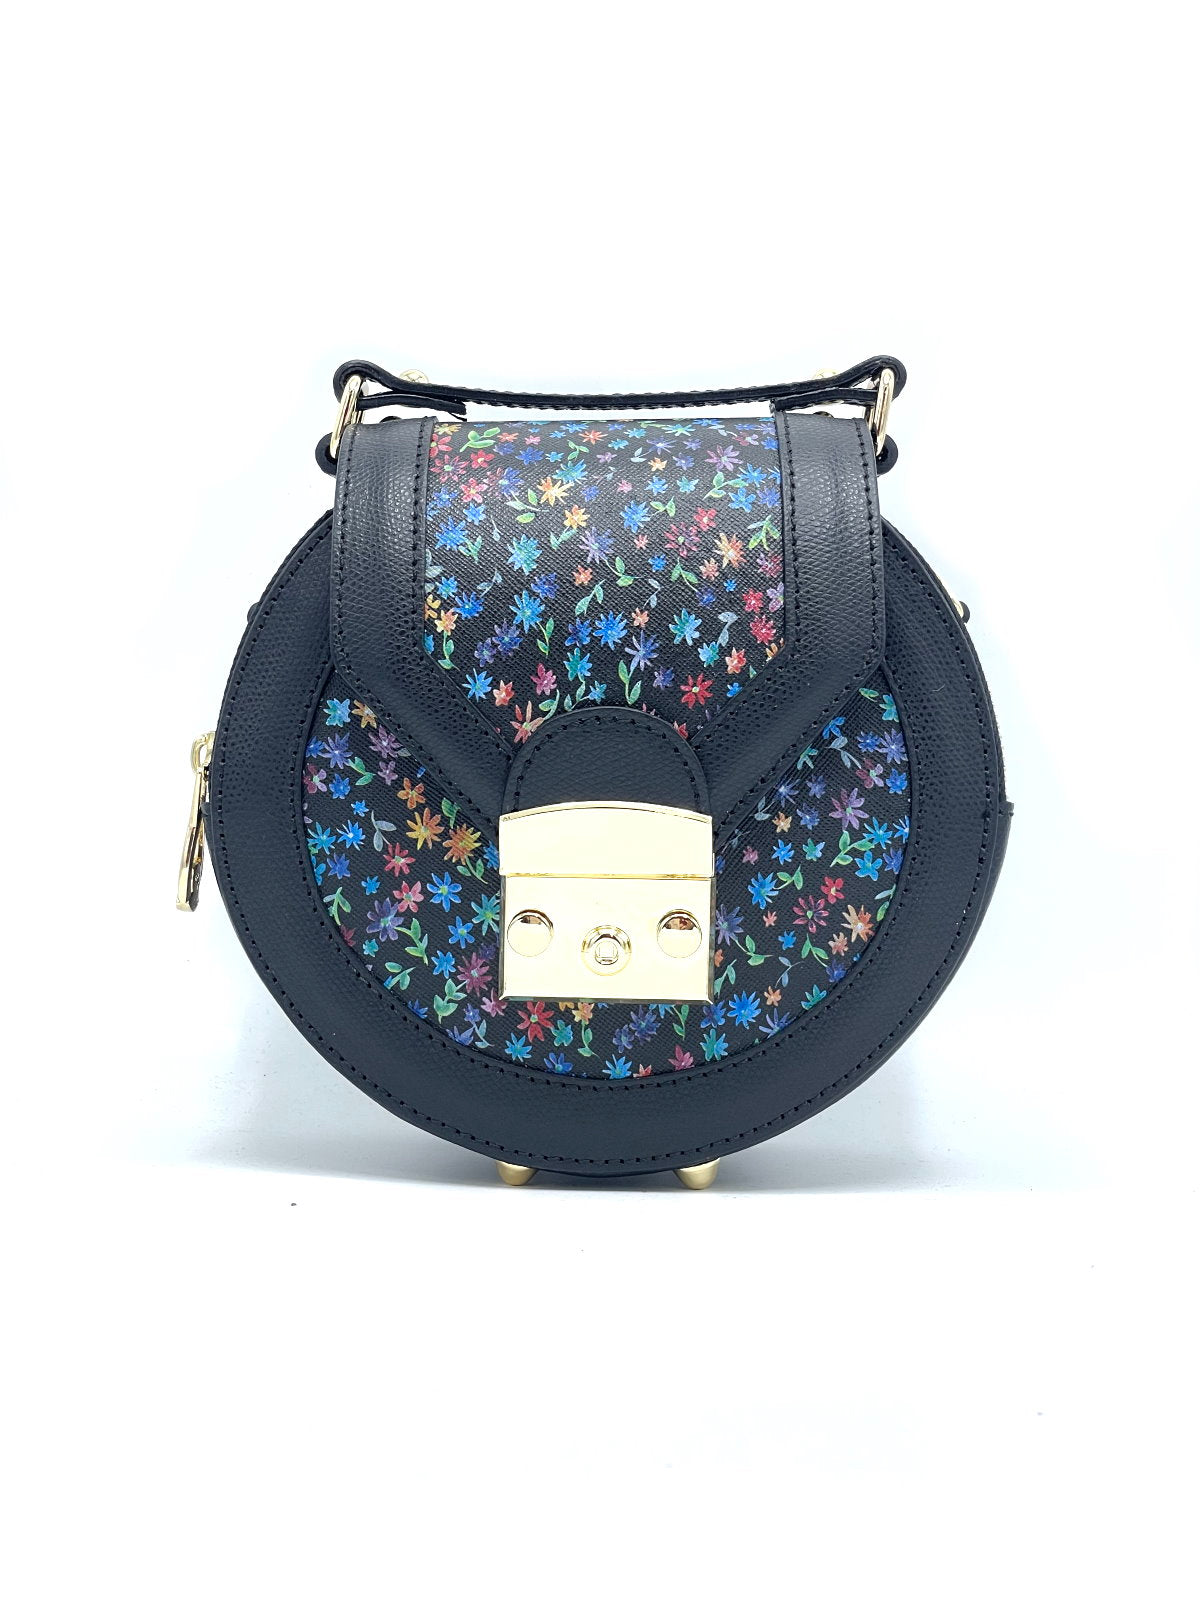 Printed palmellato genuine leather handbag for women art. 112320.412-3